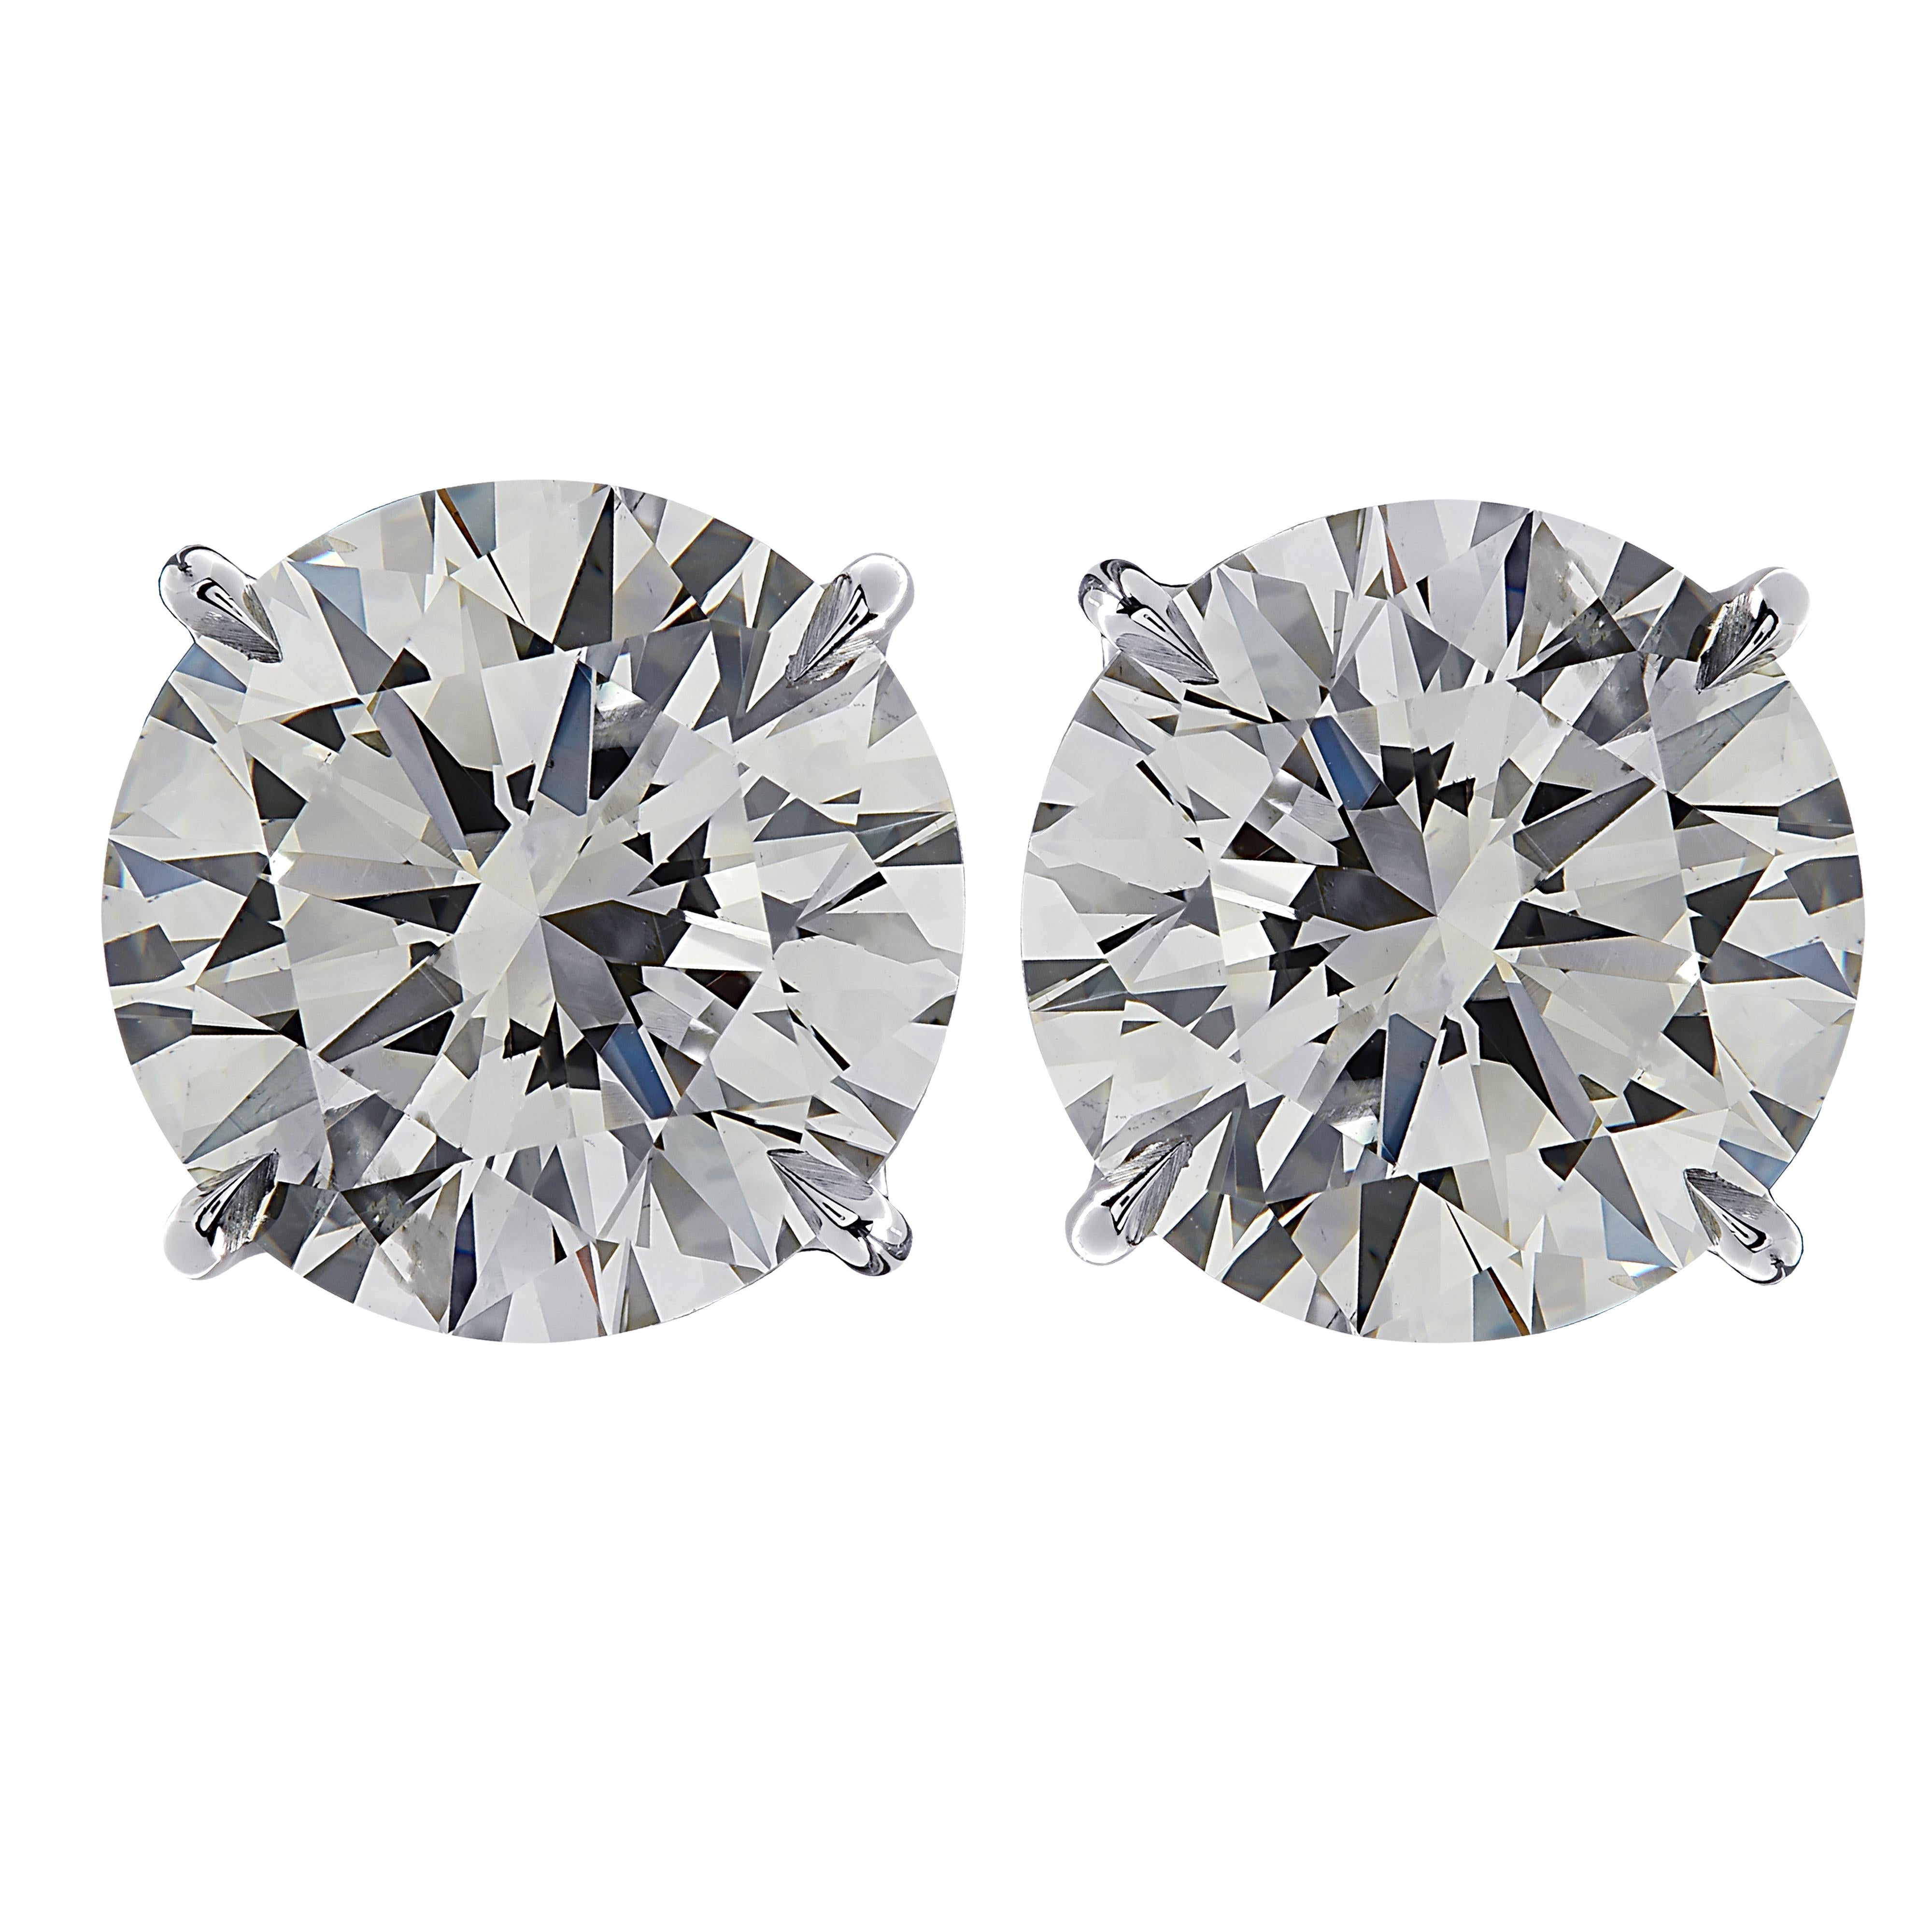 Round Cut Vivid Diamonds GIA Certified 6.01 Carat Diamond Solitaire Stud Earrings